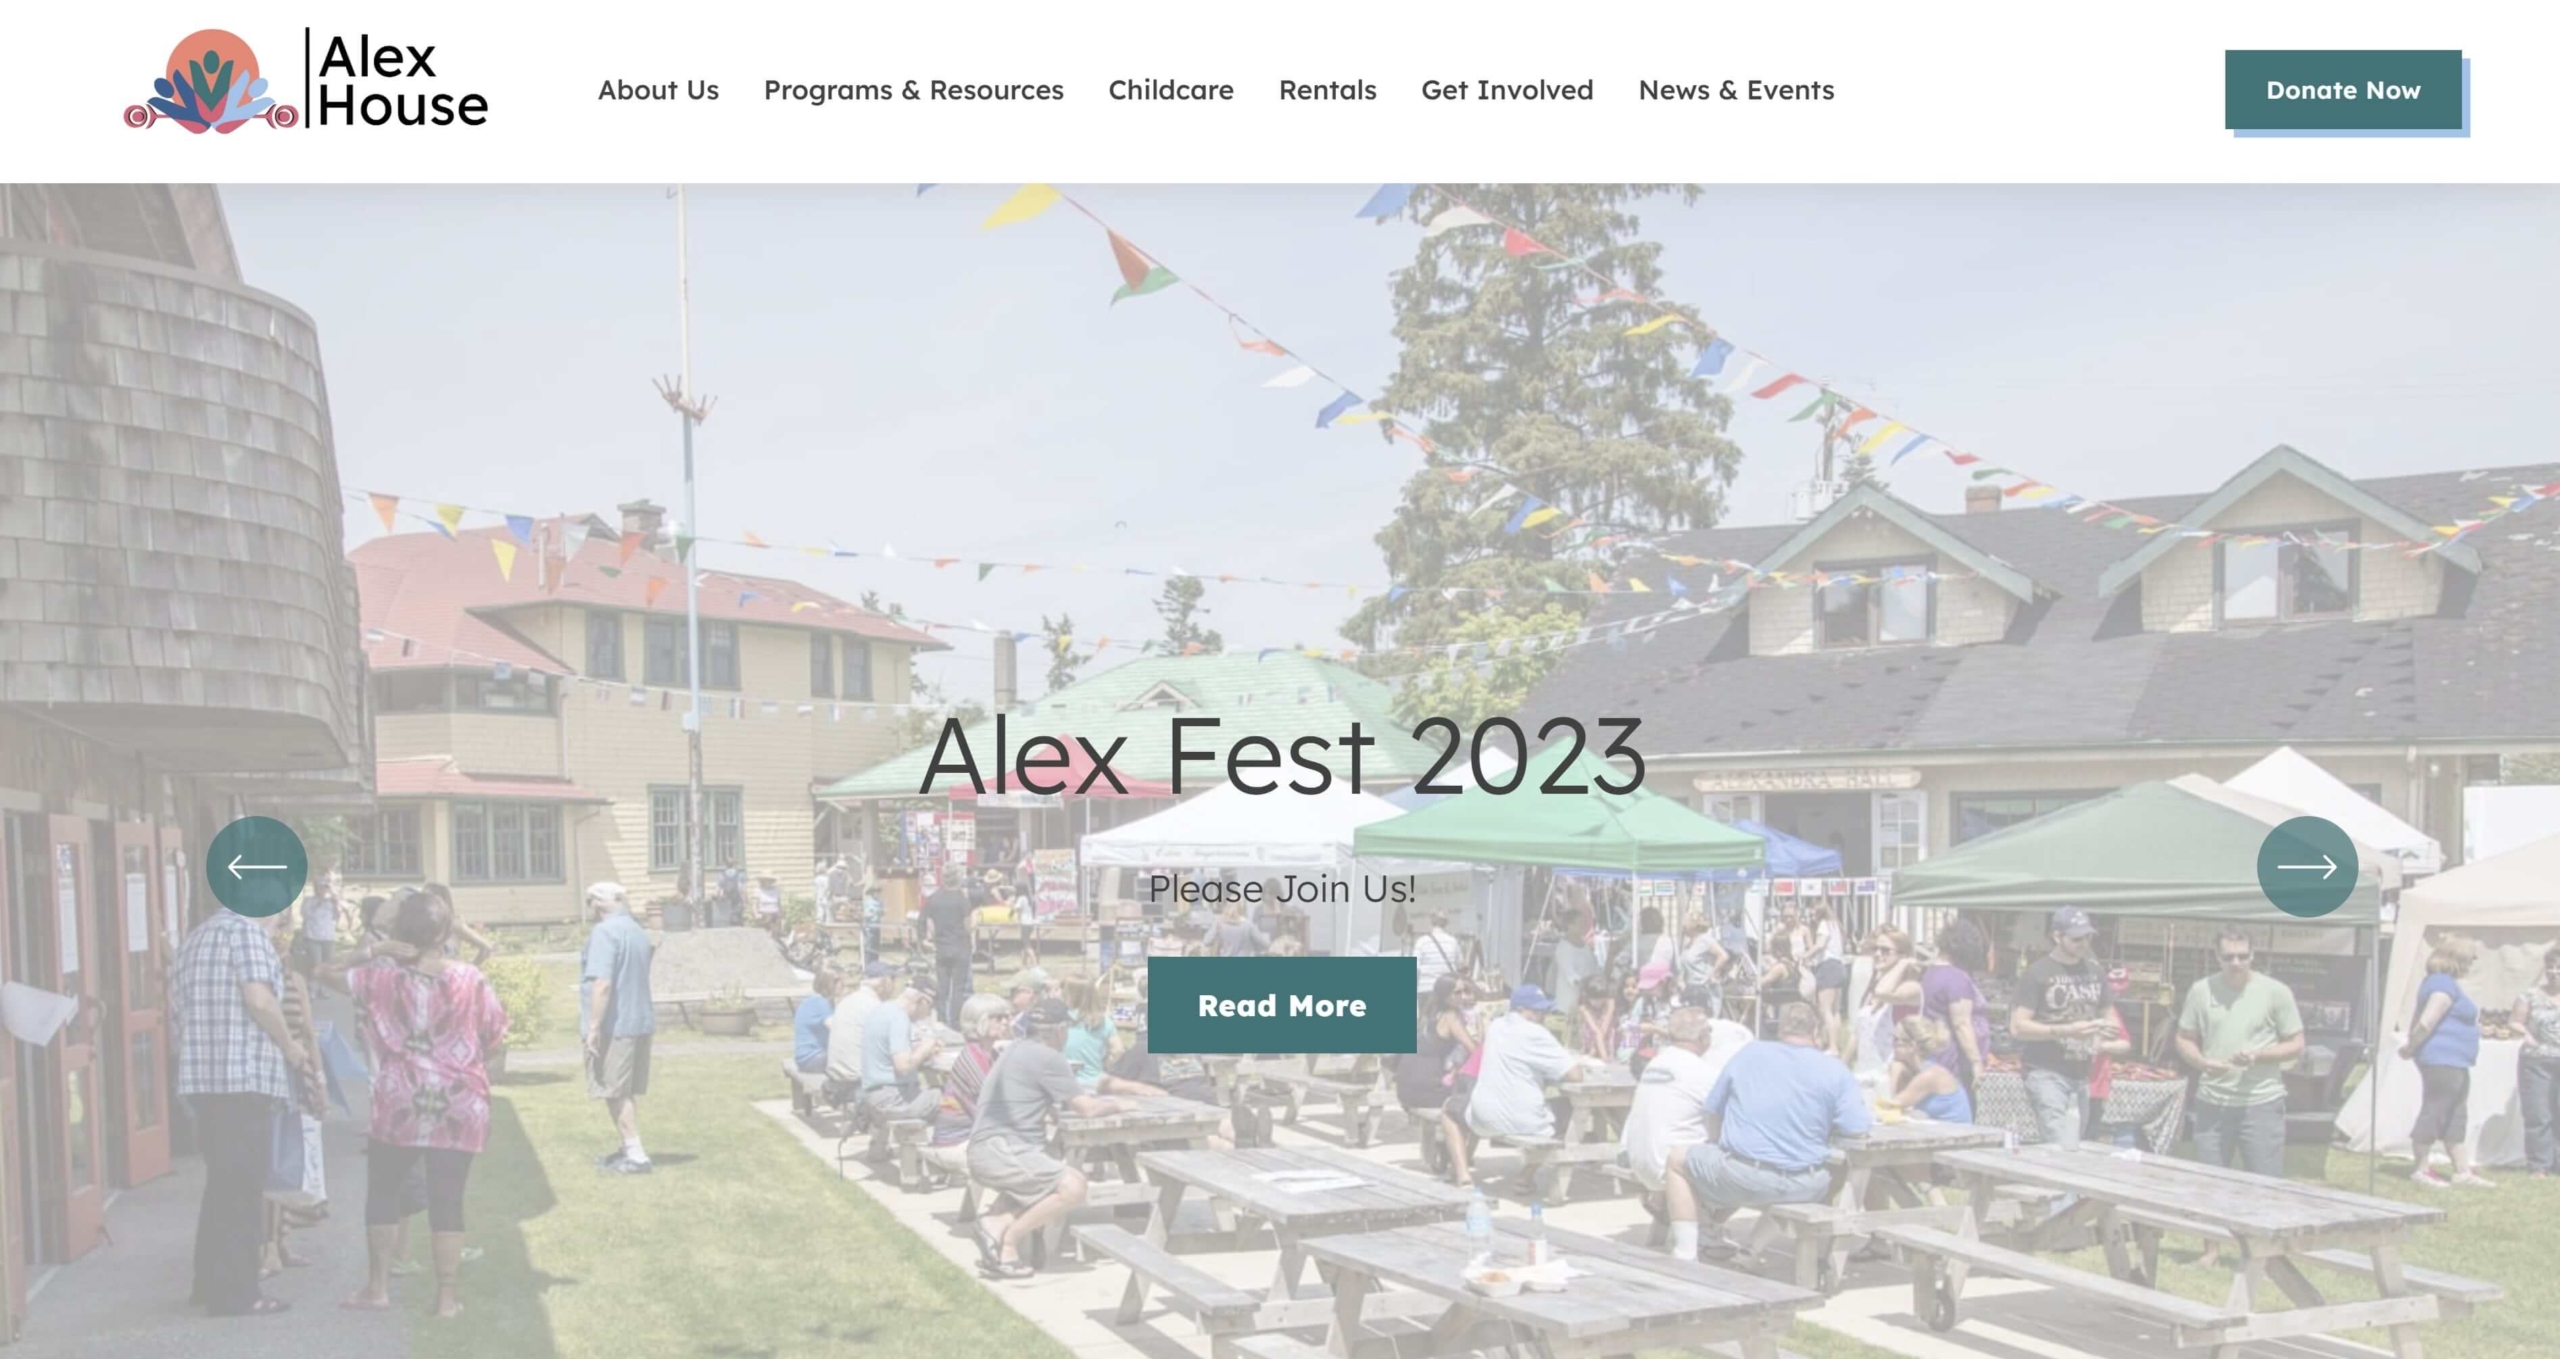 Alex House website home page